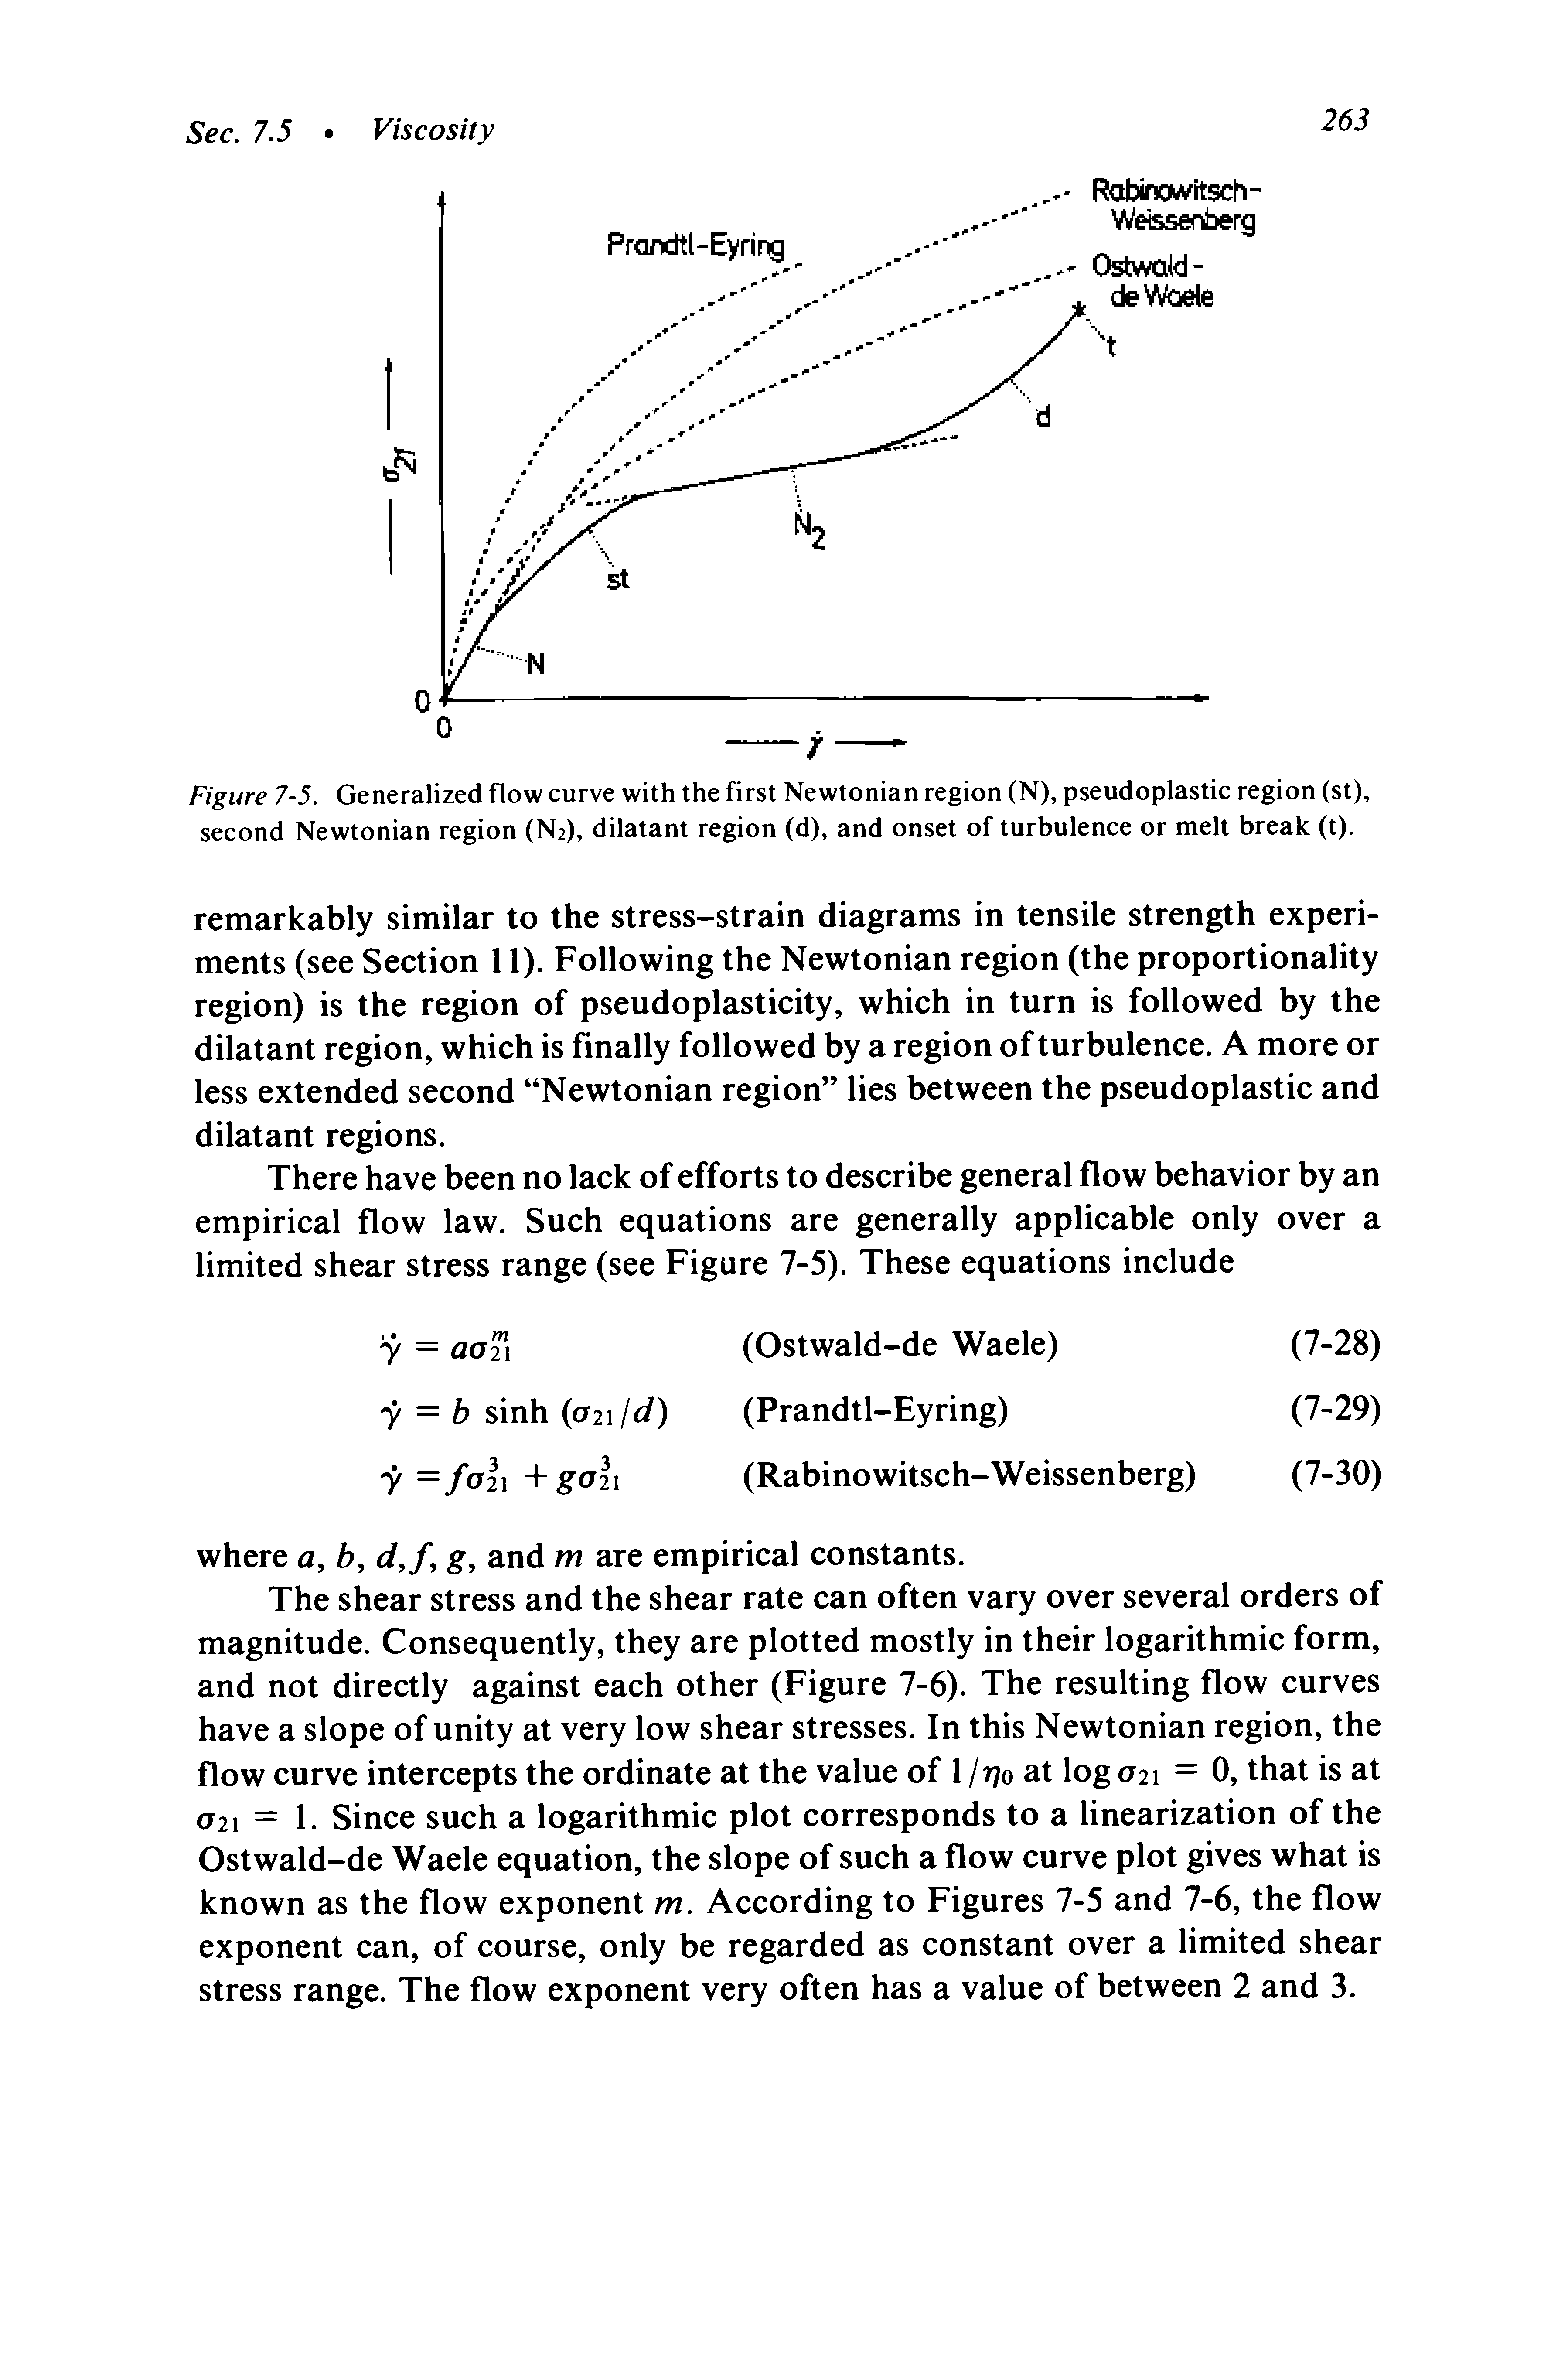 Figure 7-5. Generalized flow curve with the first Newtonian region (N), pseudoplastic region (st), second Newtonian region (N2), dilatant region (d), and onset of turbulence or melt break (t).